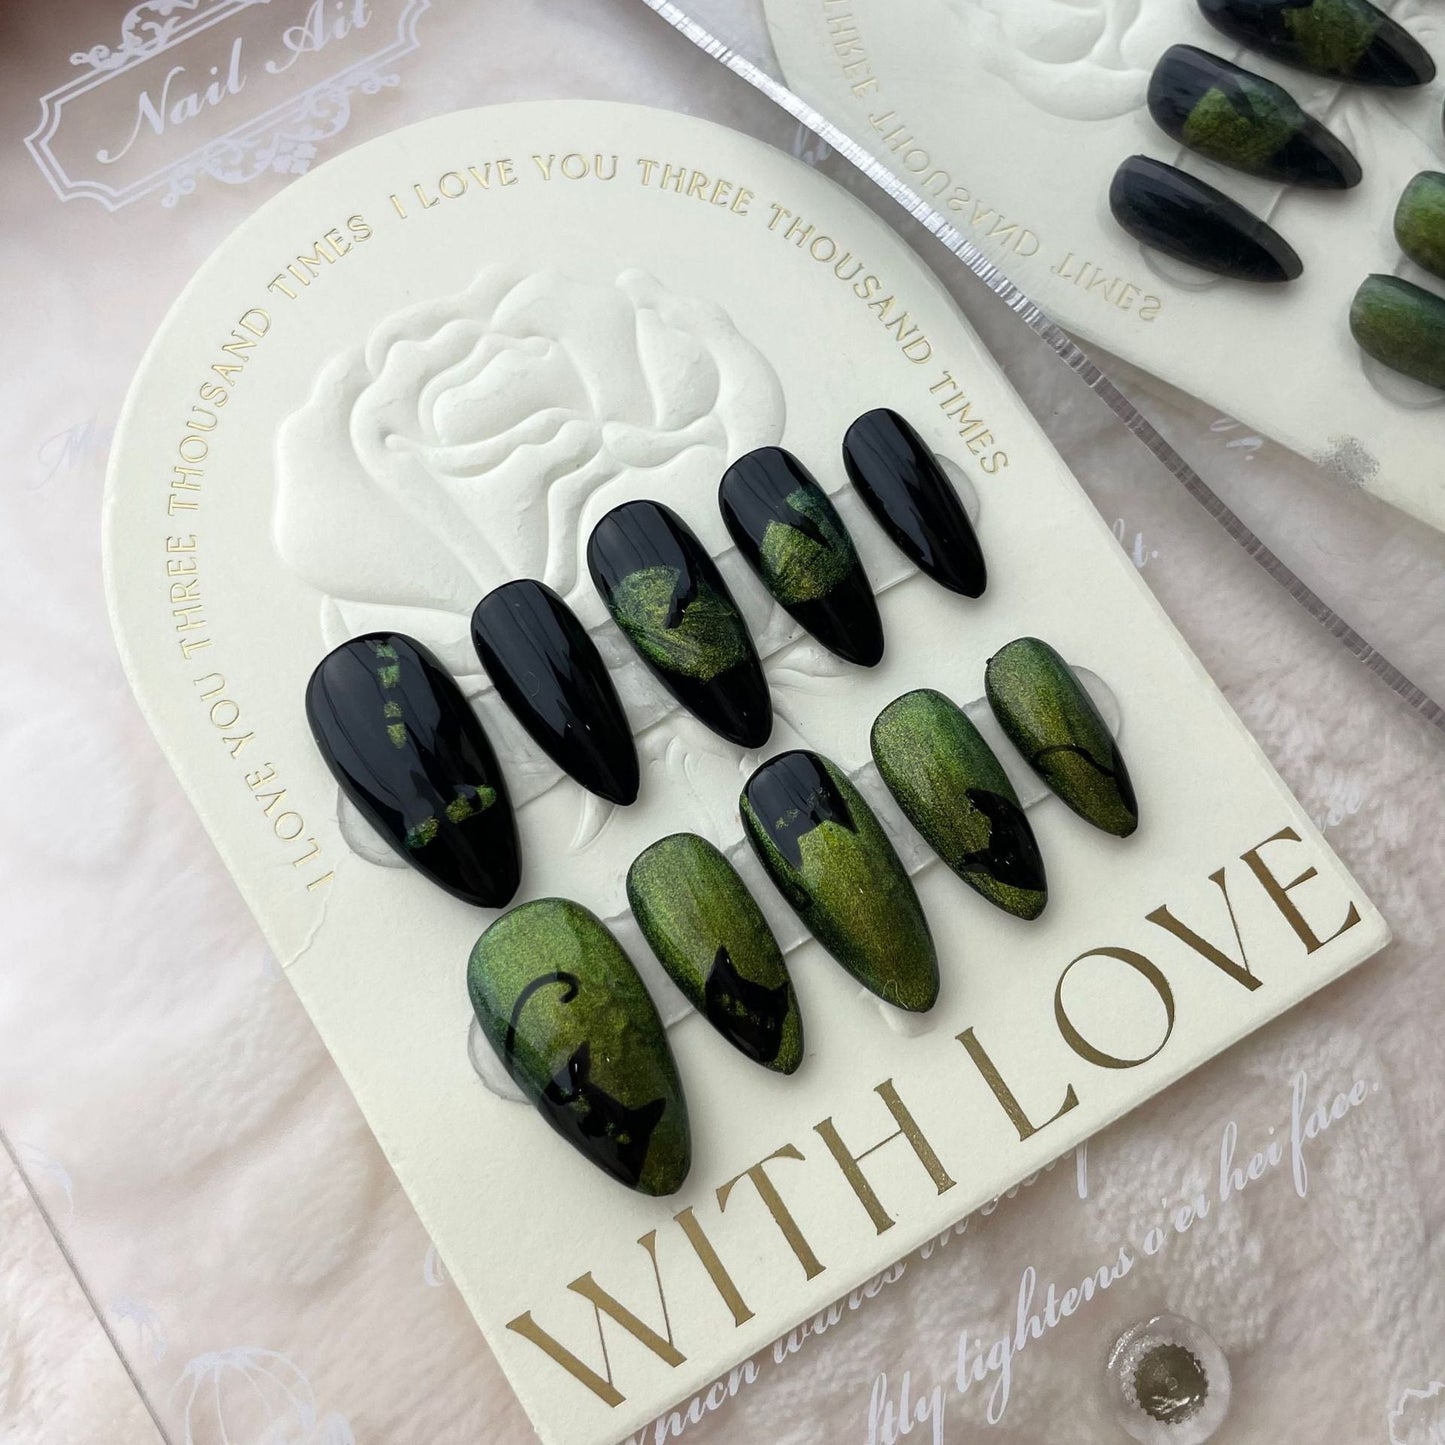 520 Cool cat eyes style press on nails 100% handmade false nails black green